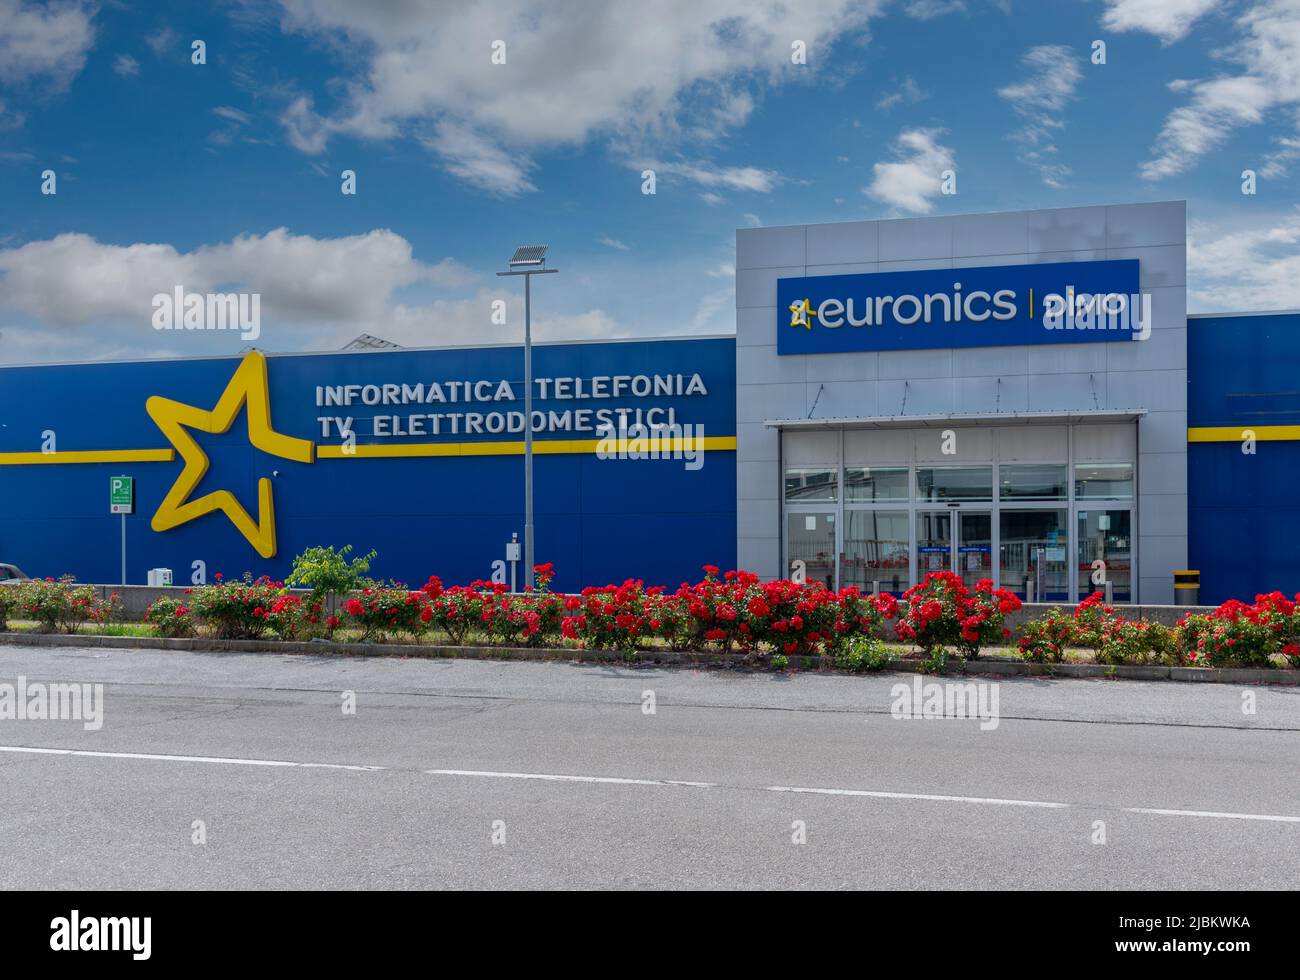 Cuneo, Italy - June 03, 2022: Euronics Dimo store, international electrical retail group. Tex : informatica telefonia tv elettrodomestici (computer te Stock Photo